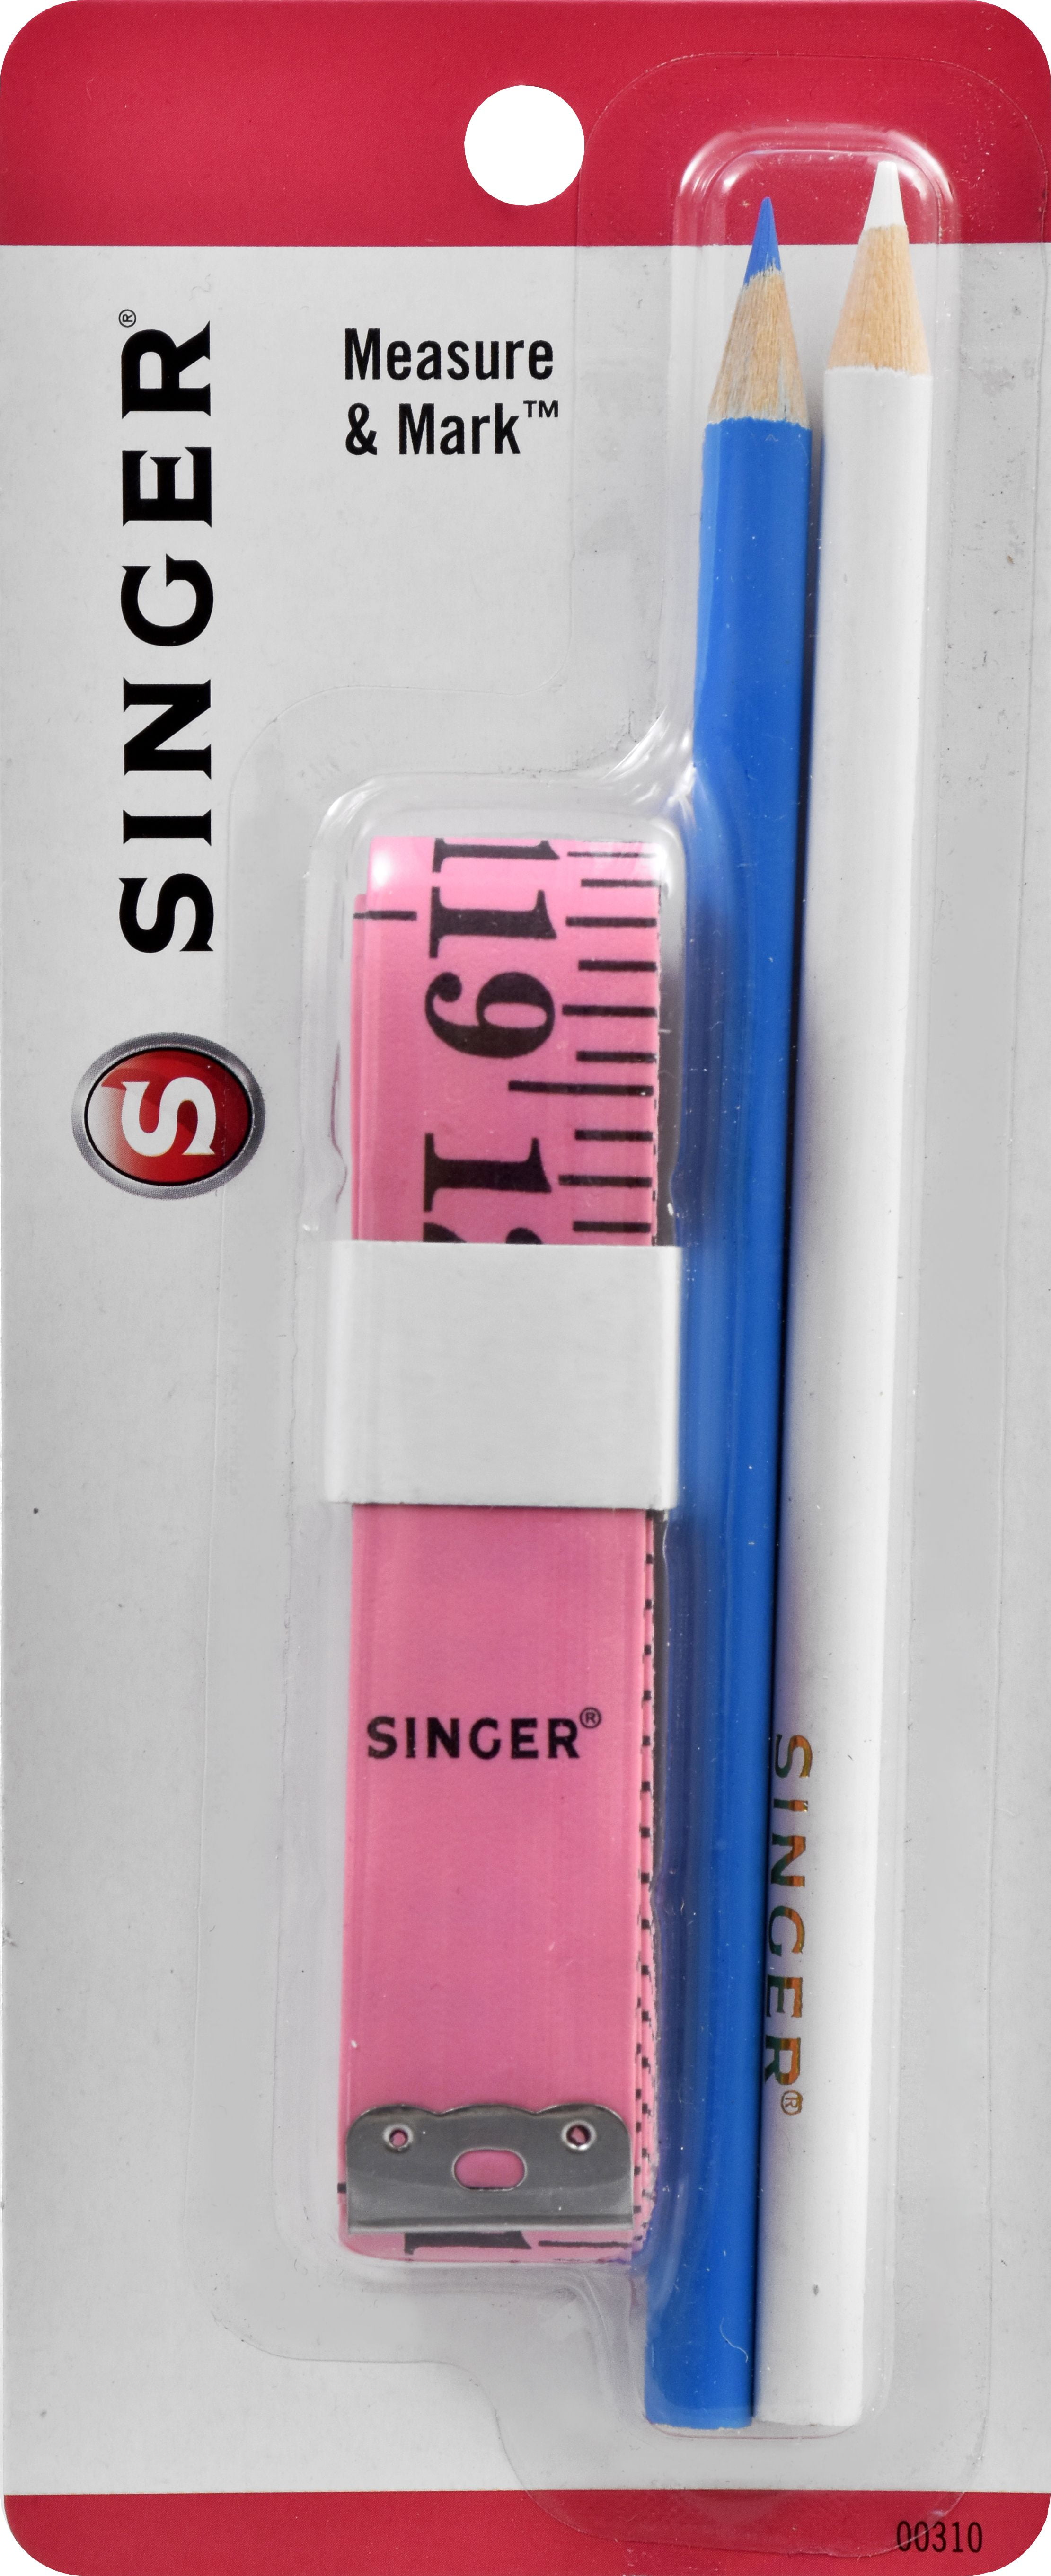 SINGER Measure & Mark Combo with Tape Measure & Pencils, 3 Piece 